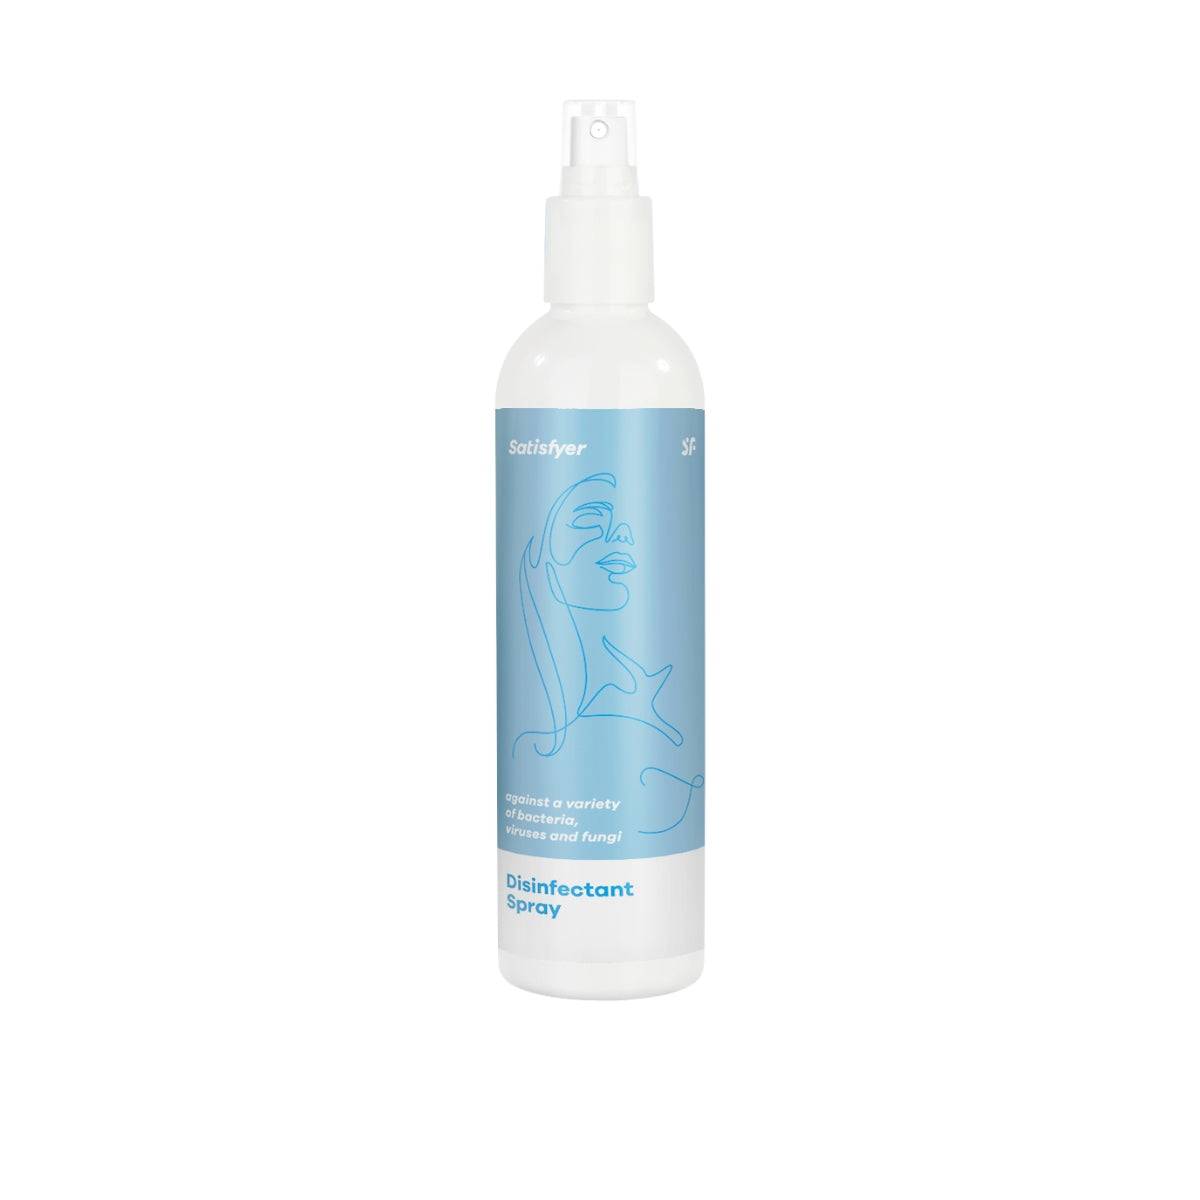 Satisfyer Disinfectant Spray 300ml